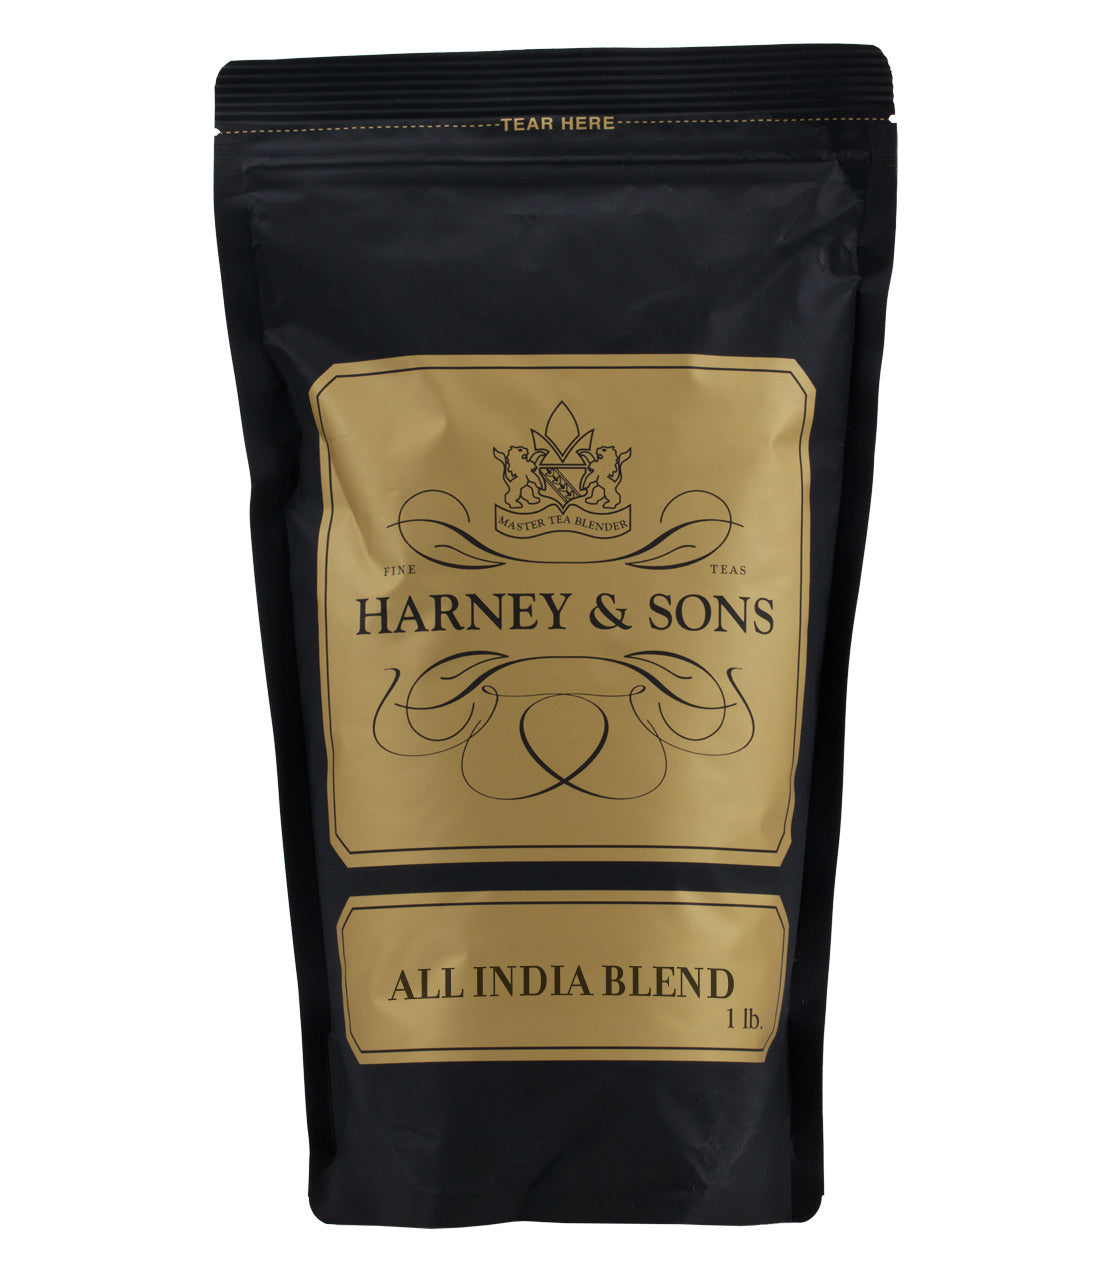 All India Blend - Loose 1 lb. Bag - Harney & Sons Fine Teas